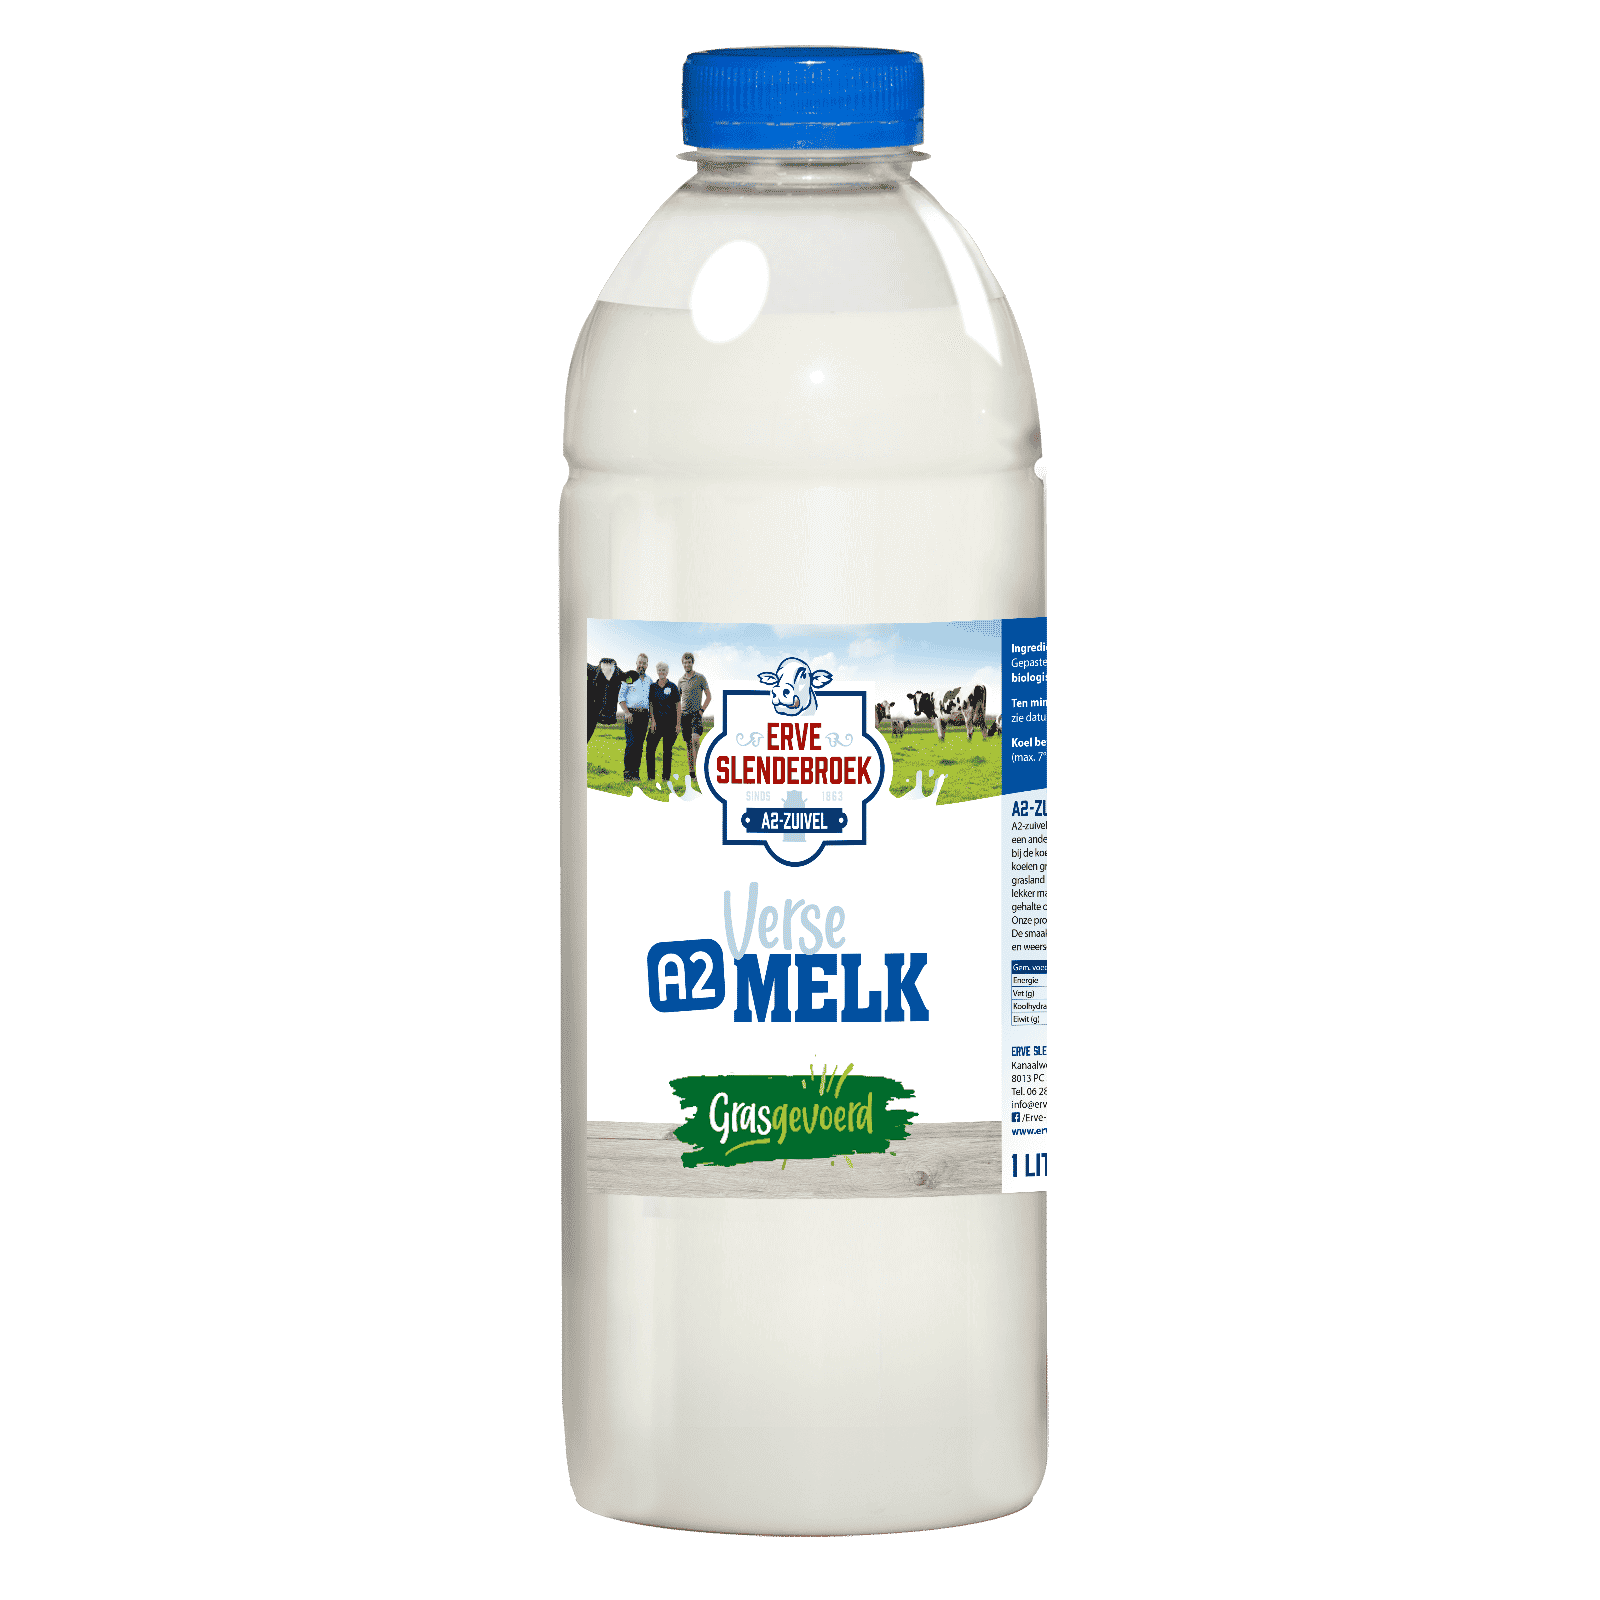 Melk van grasgevoerde koeien